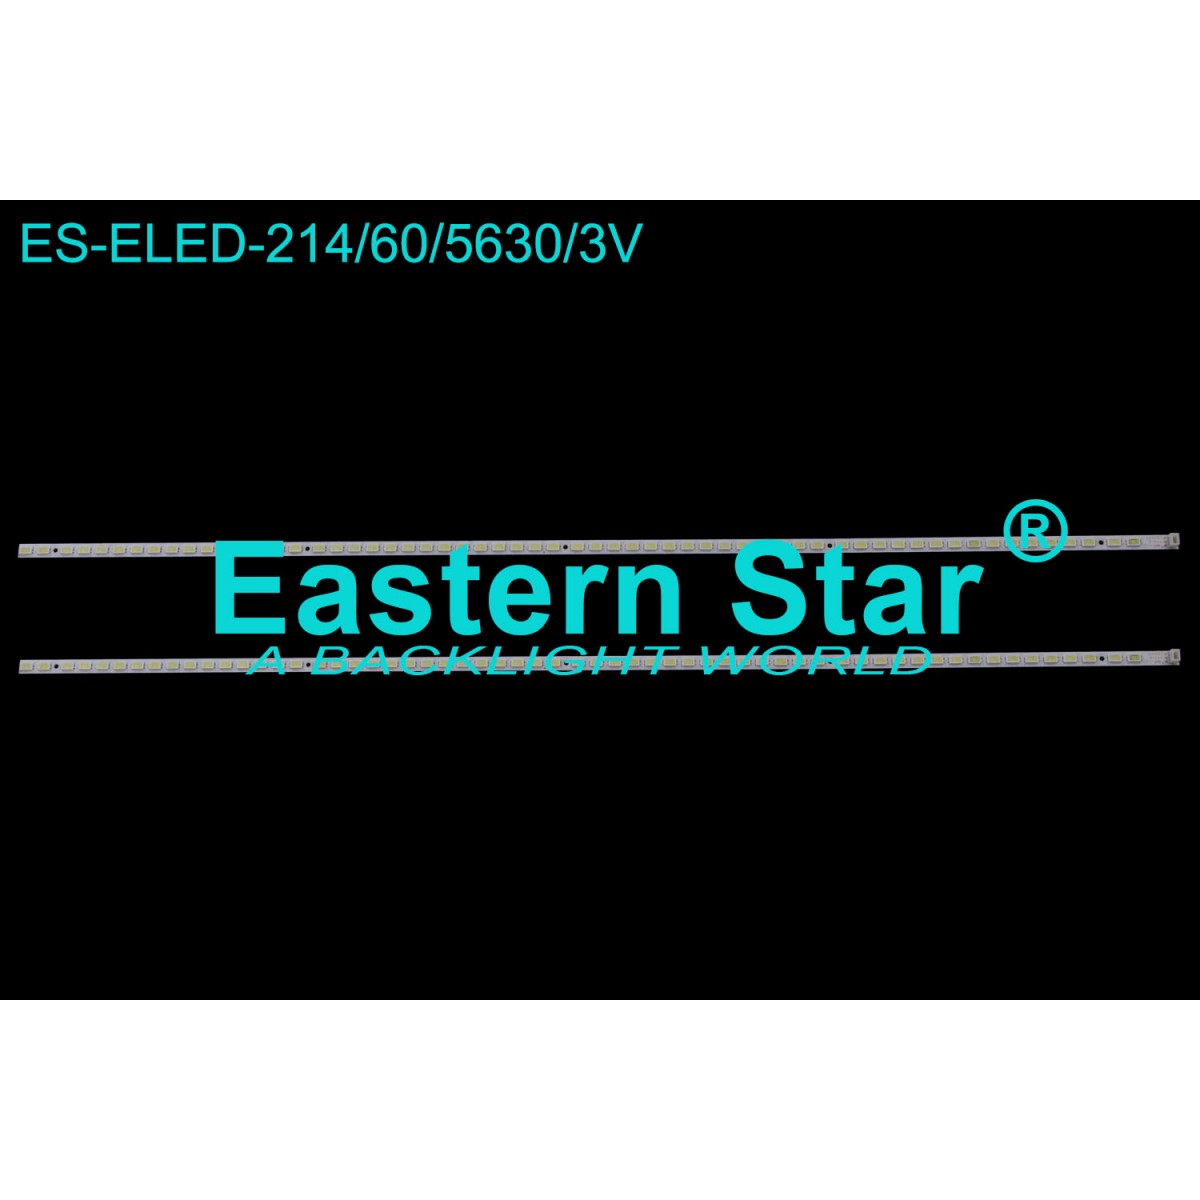 ES-ELED-214, LG, 42LV3400, 42LV3550, 42LV375S, 42LV4500, 42LV5500, T420HW08 V9, T420HW08 V0, T420HW08 V1, LG INNOTEK 42NCH 5630PKG 2CUP 60EA REV0.1, TV LED BAR